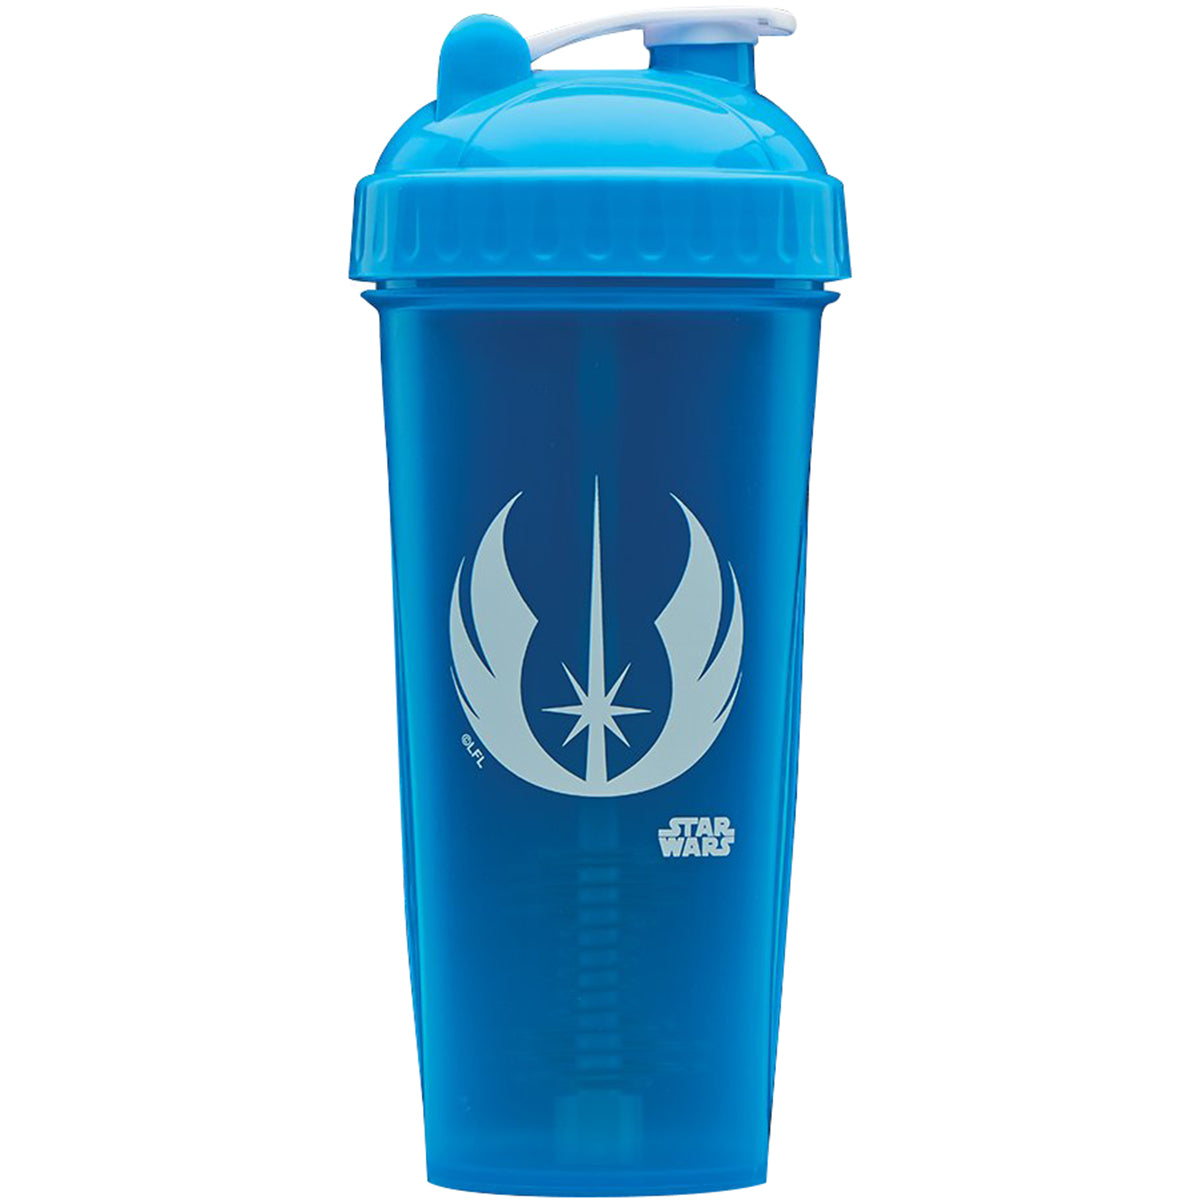 Performa PerfectShaker 28 oz. Star Wars Shaker Cup Bottle - Jedi Symbol PerfectShaker